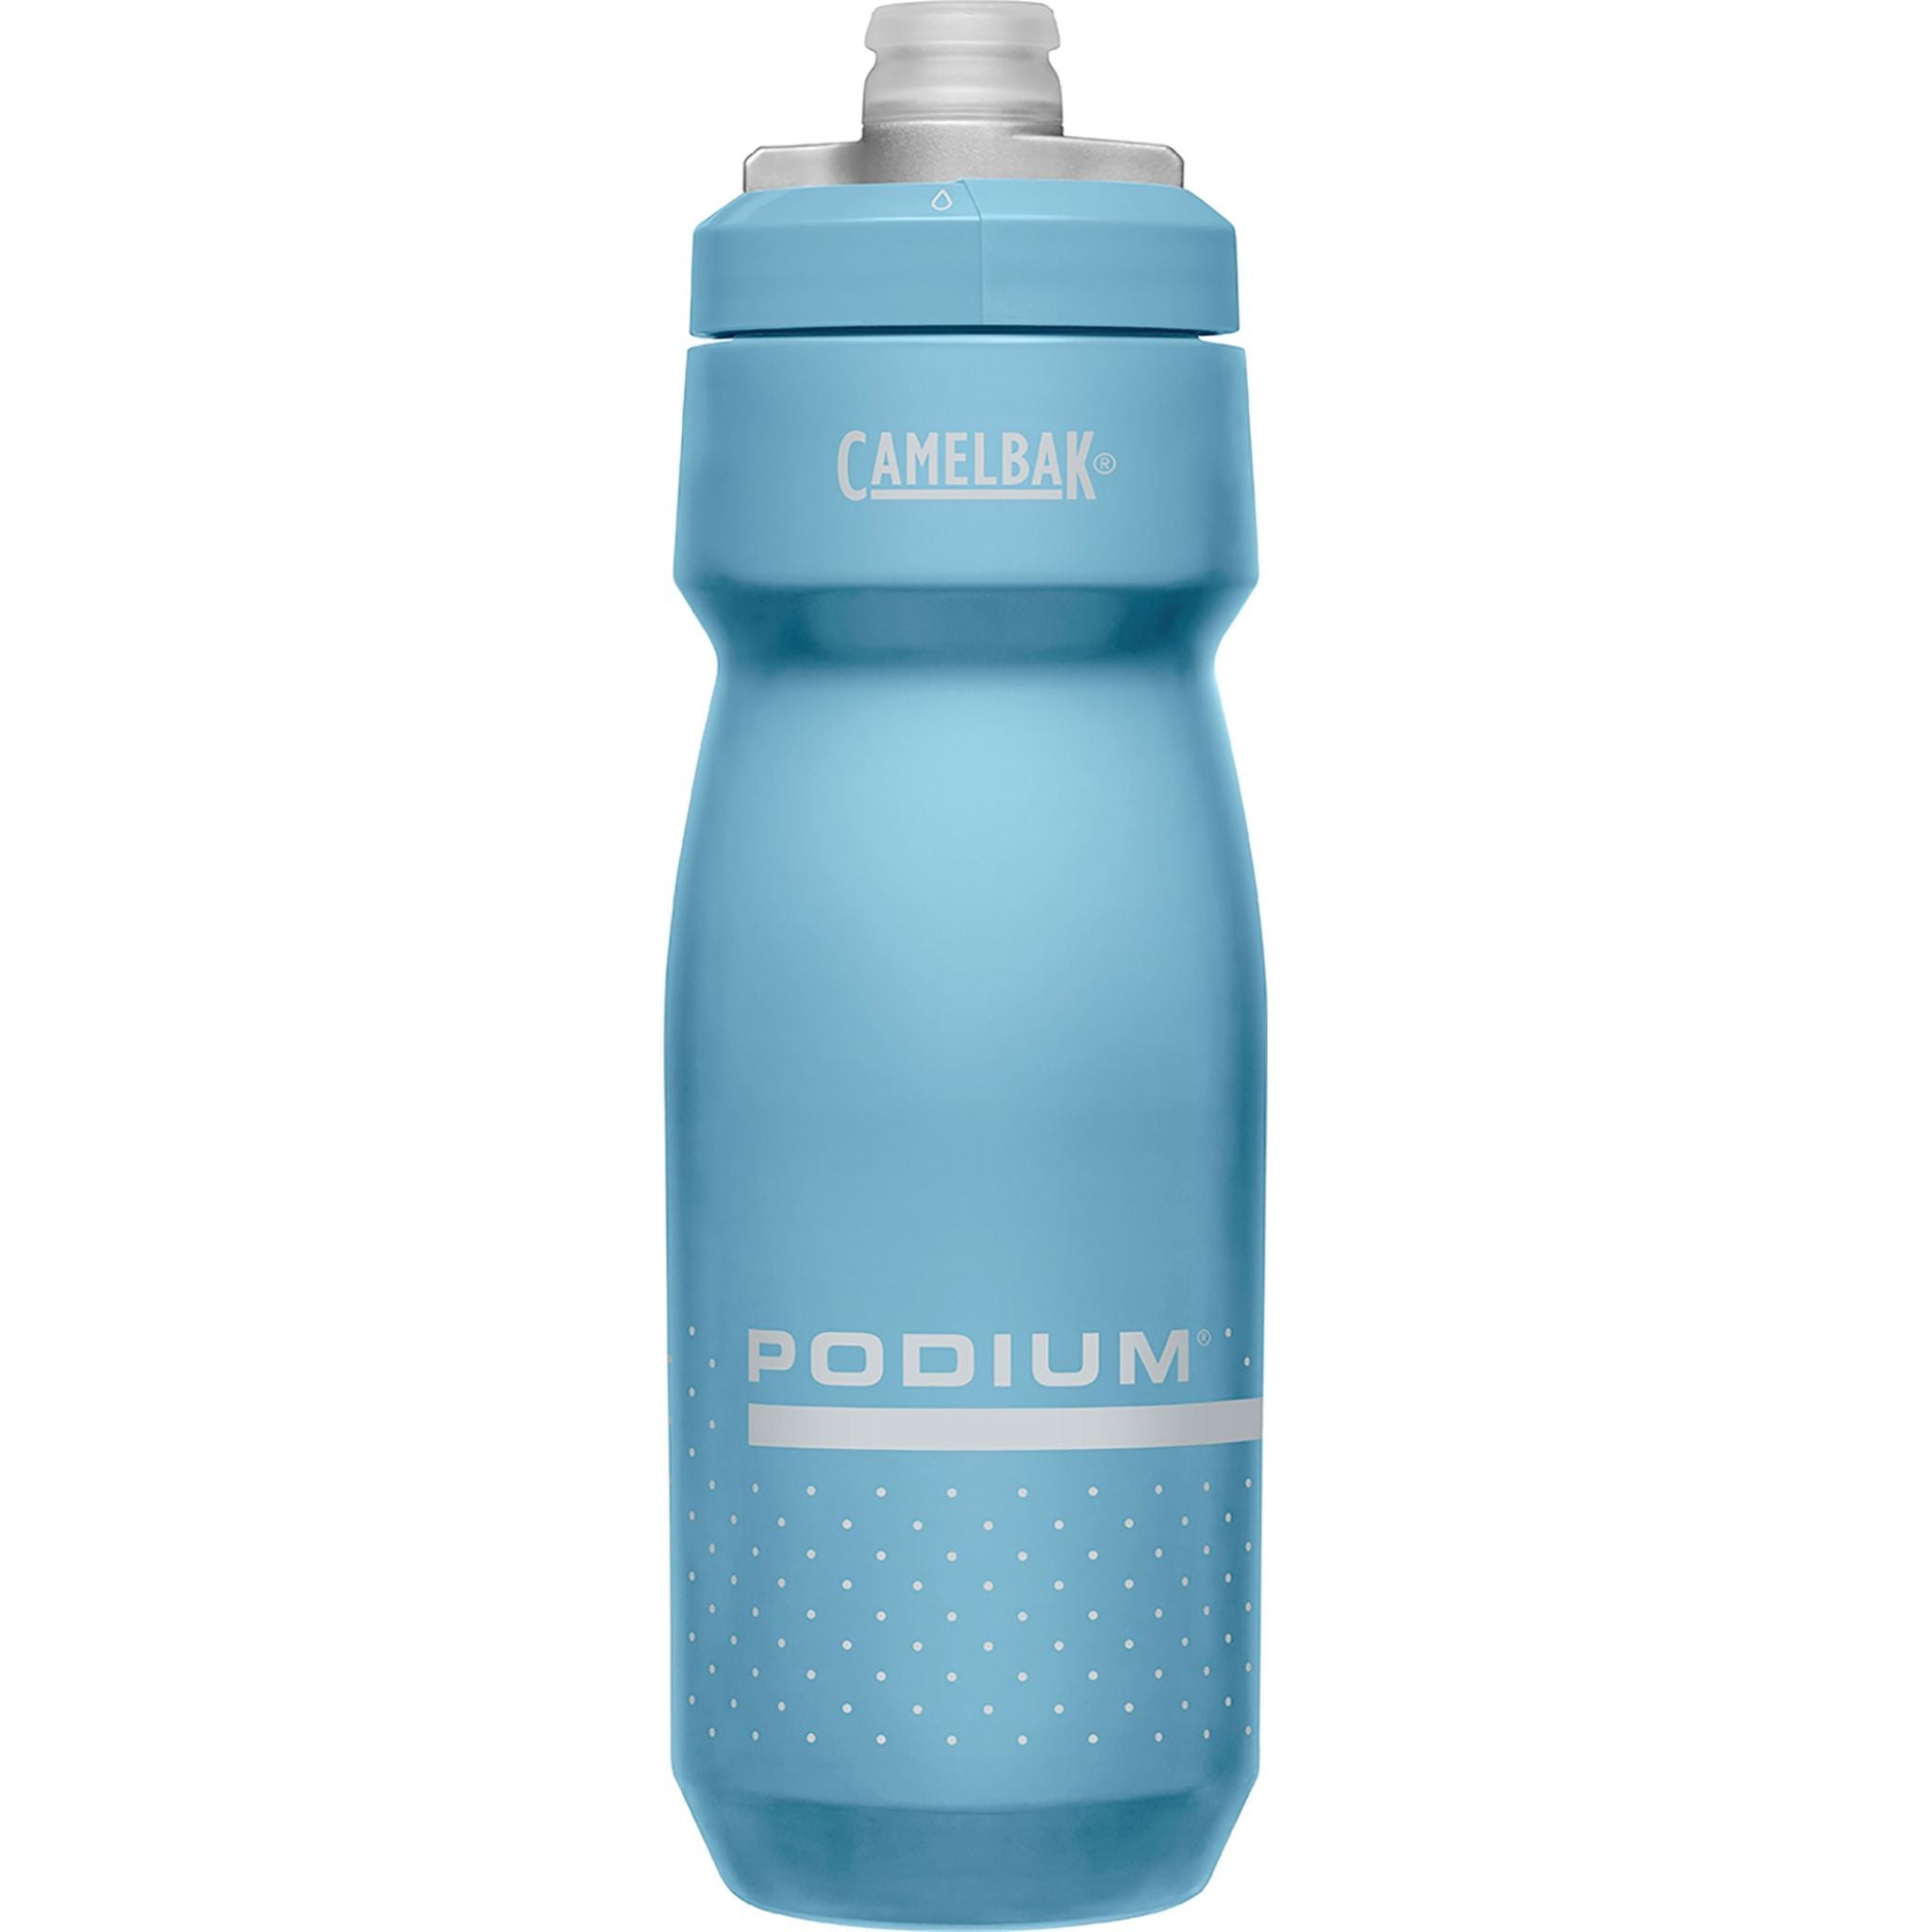 Camelbak Podium 700ml Water Bottle